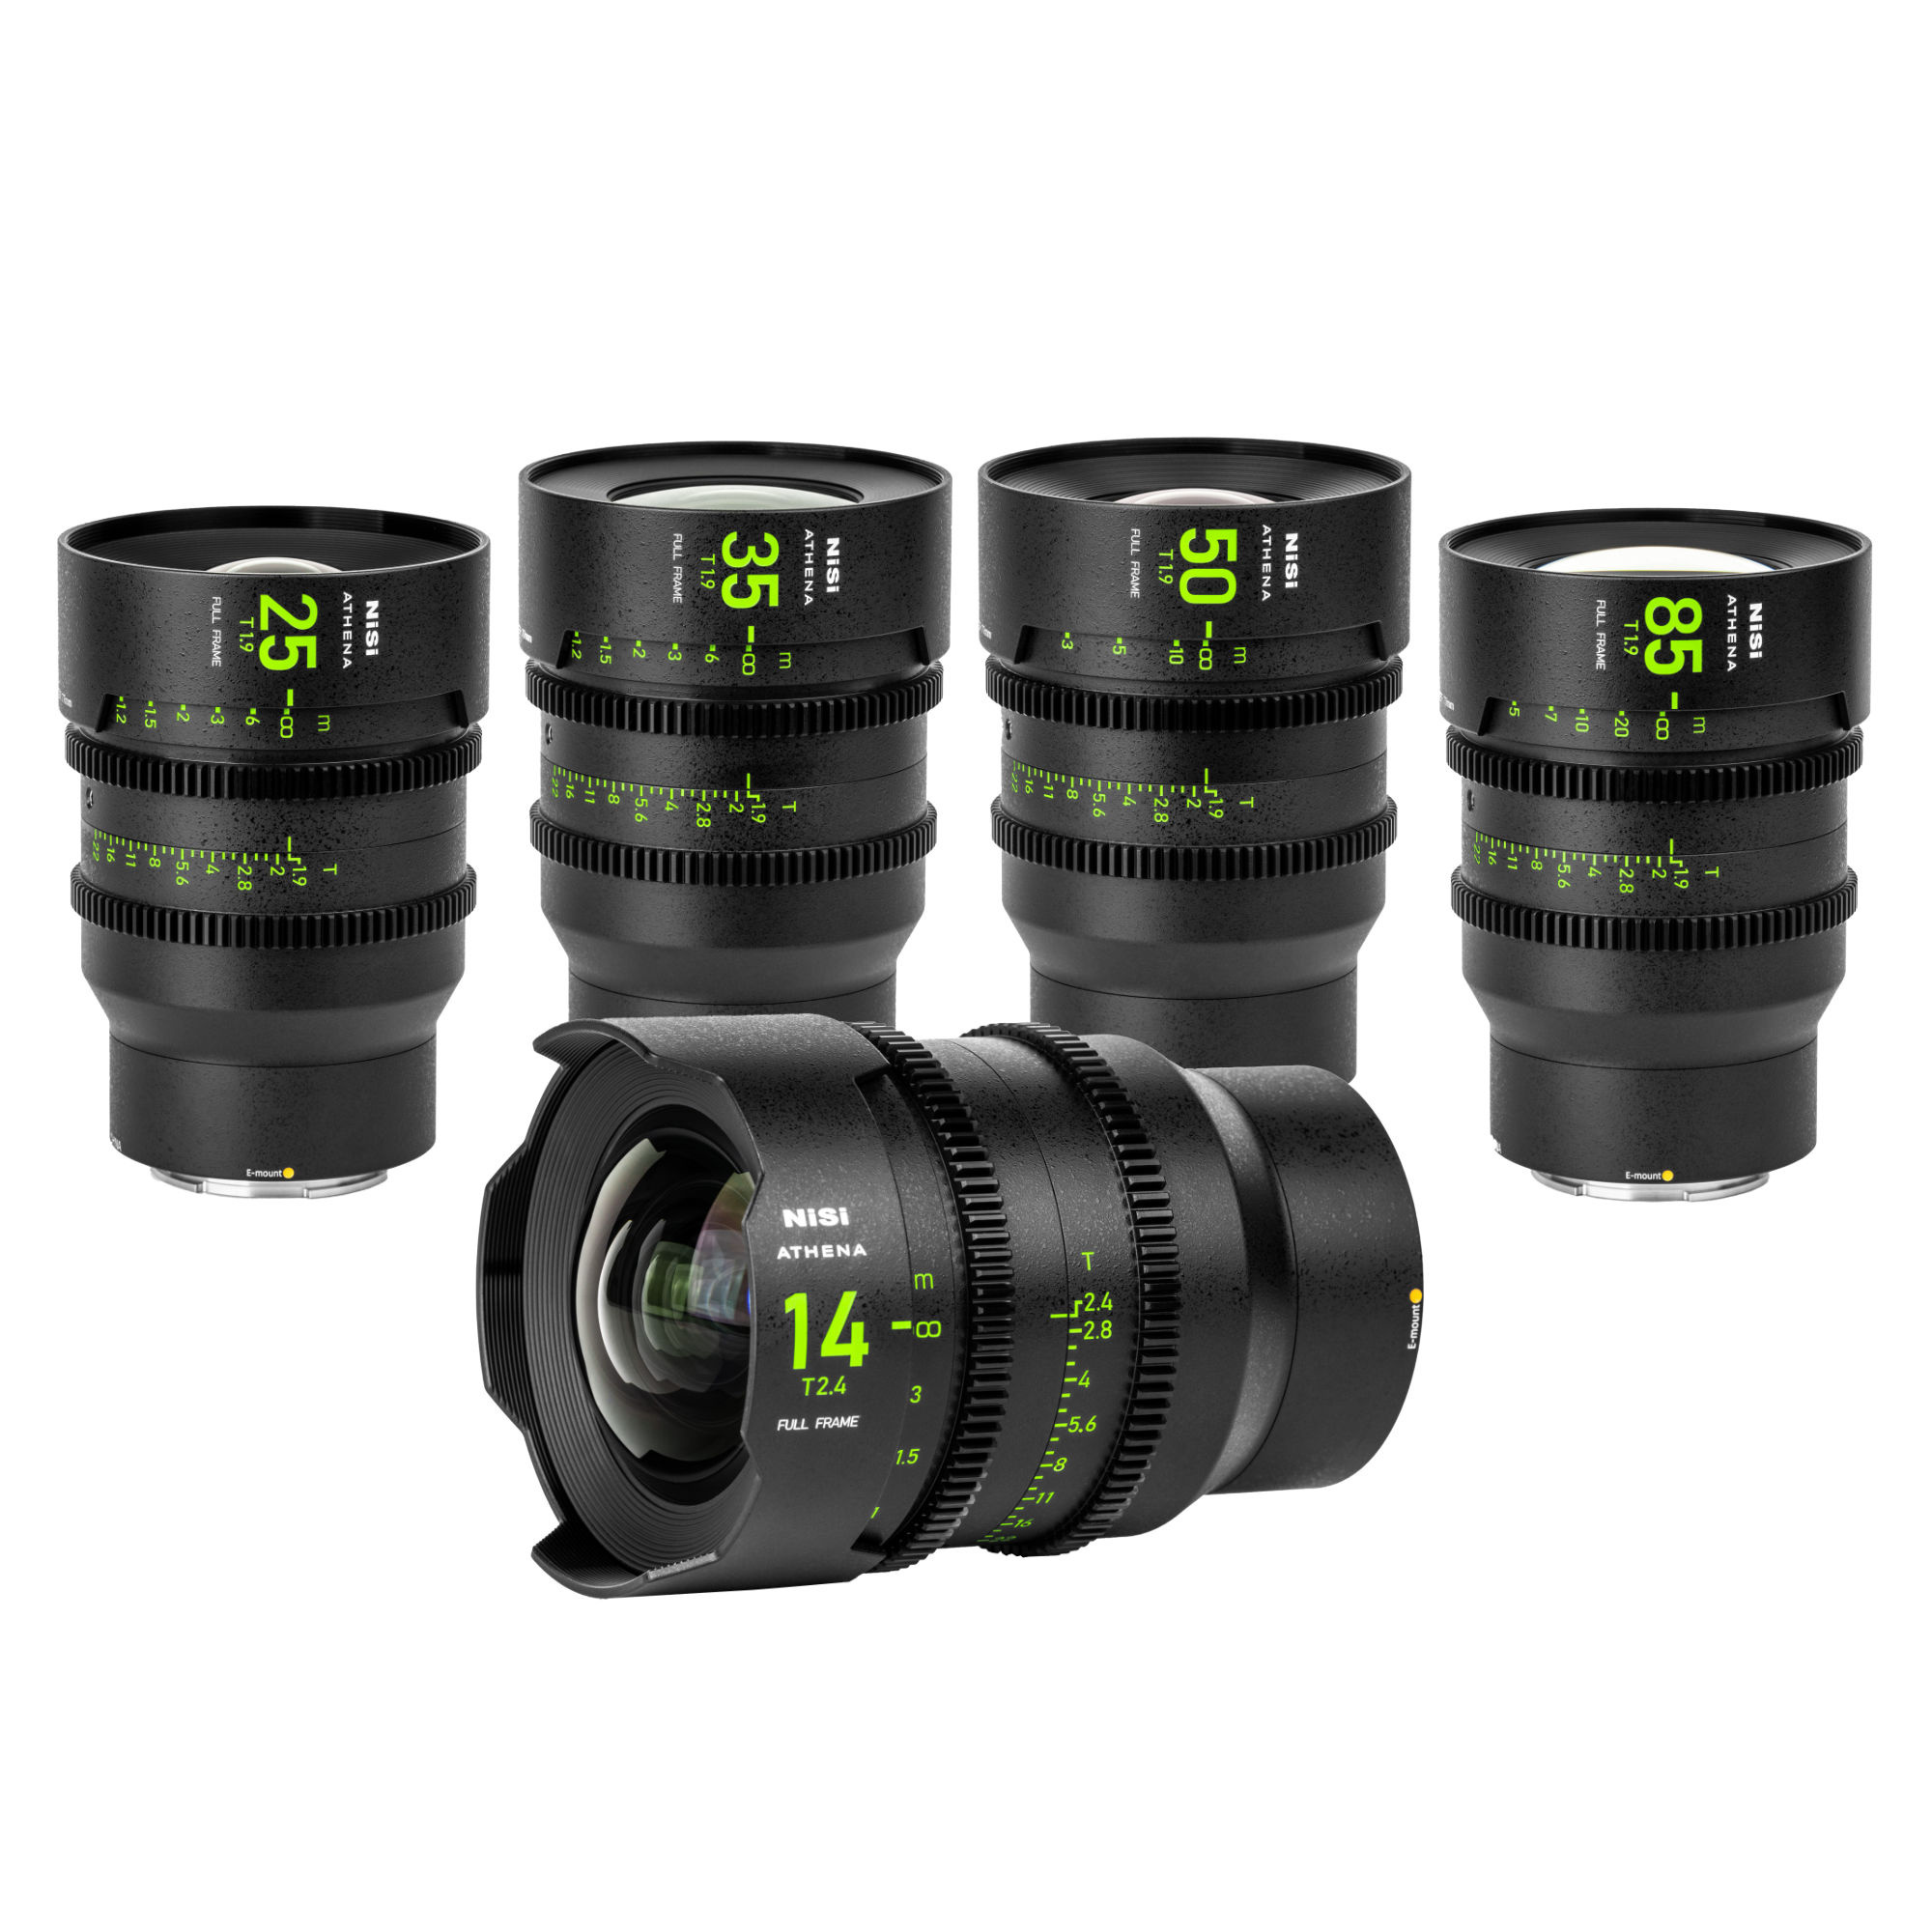 NiSi ATHENA PRIME T2.4/1.9 Full-Frame 5-Lens Kit (E Mount, No Drop-In Filters)